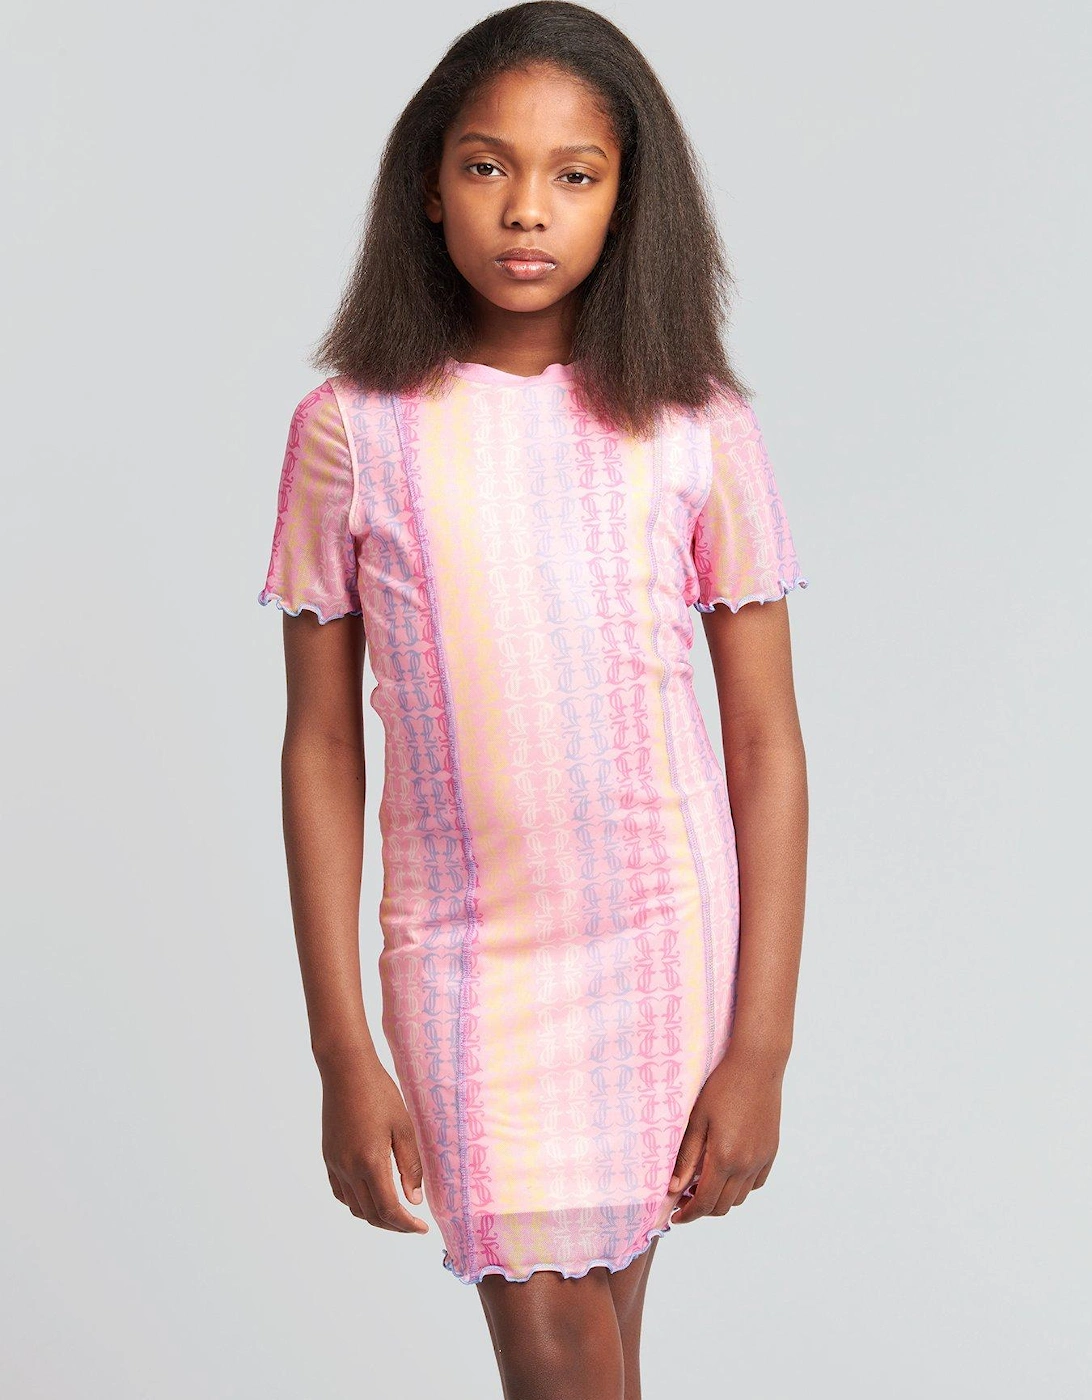 Girls All Over Print Lined Mesh Dress - Almond Blossom